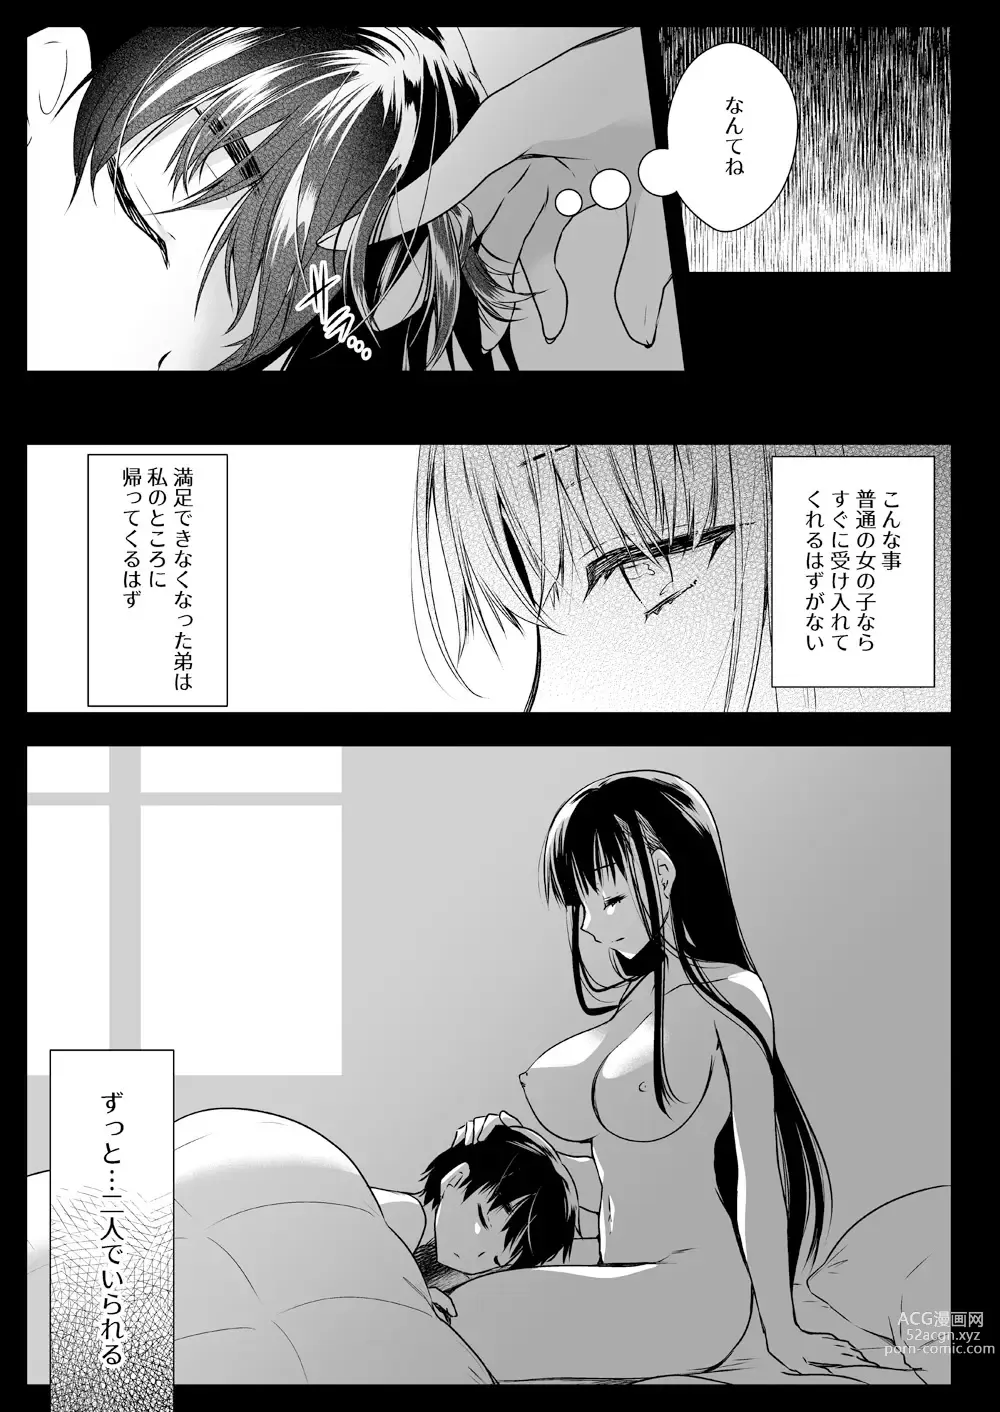 Page 26 of manga Kyou izon Kyoudai